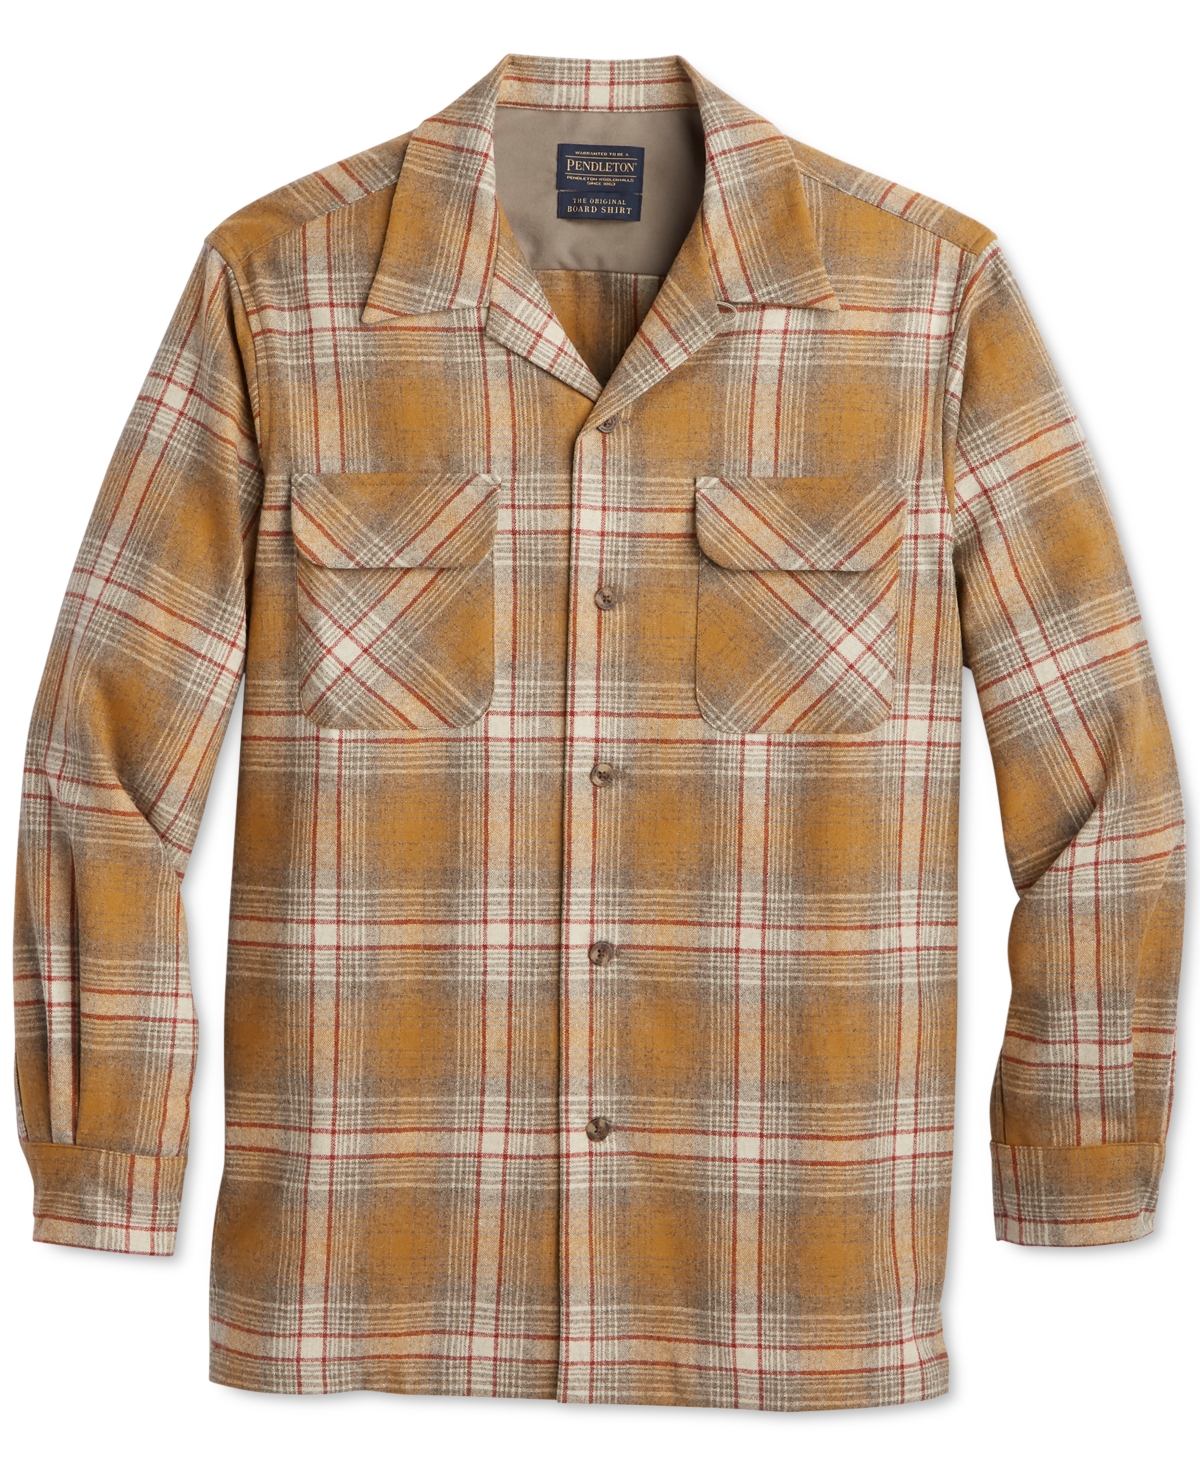 Pendleton Fremont Flannel Shirt - Men's Dark Olive/Tan/Red Plaid, L